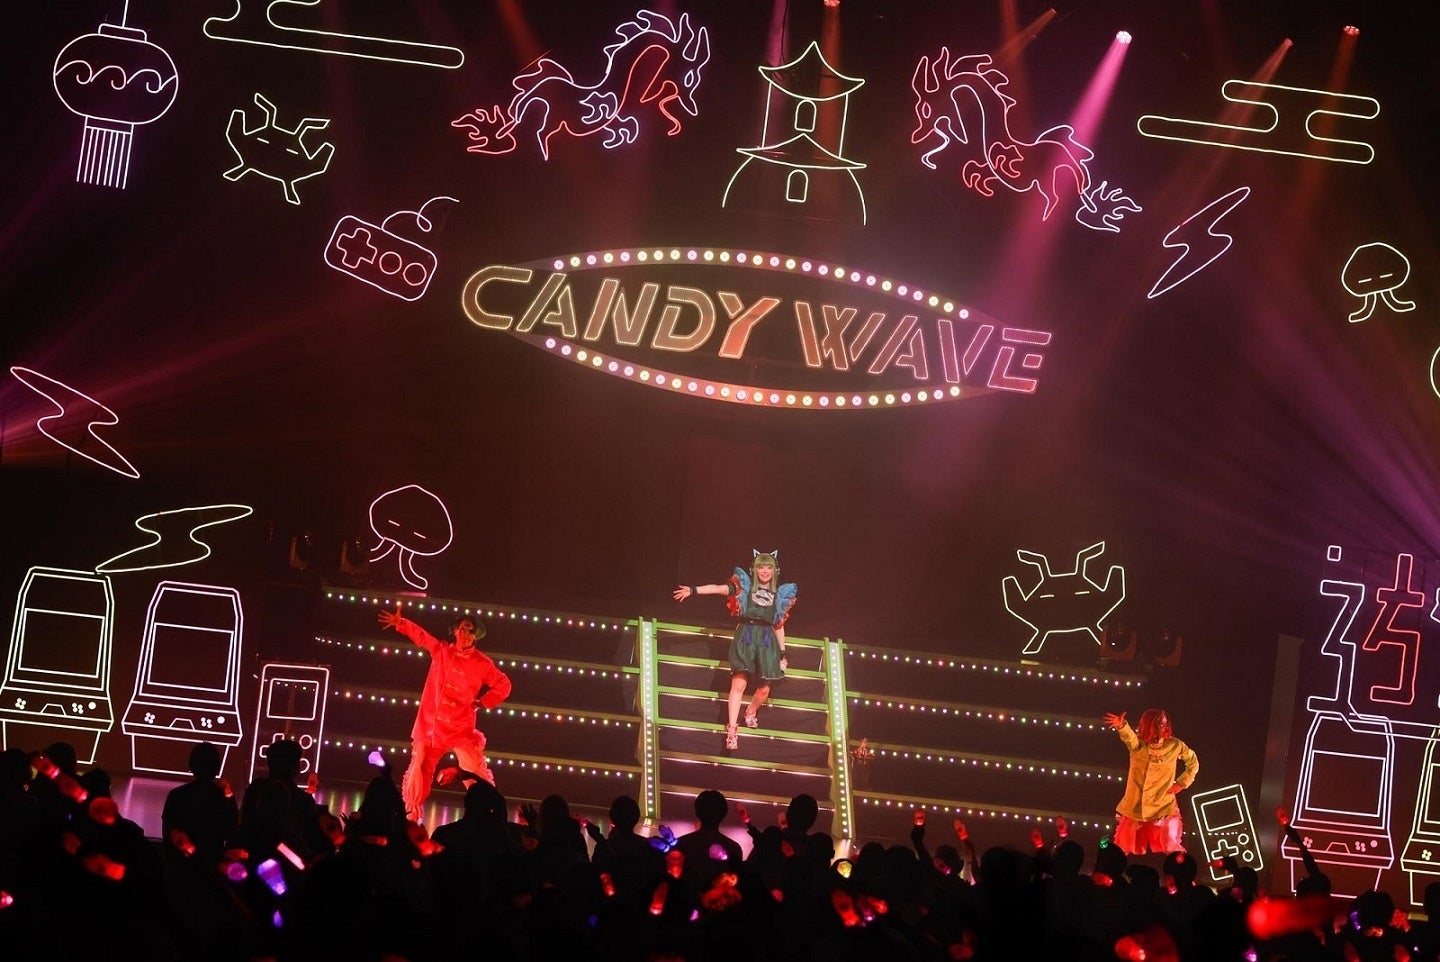 $HOR1 WINBOYが1STアルバム『STAR』から「Go Go Star」のファン待望のダンスMV公開。監督はKANTO TSUJI、KAZtheFIREが振り付け。